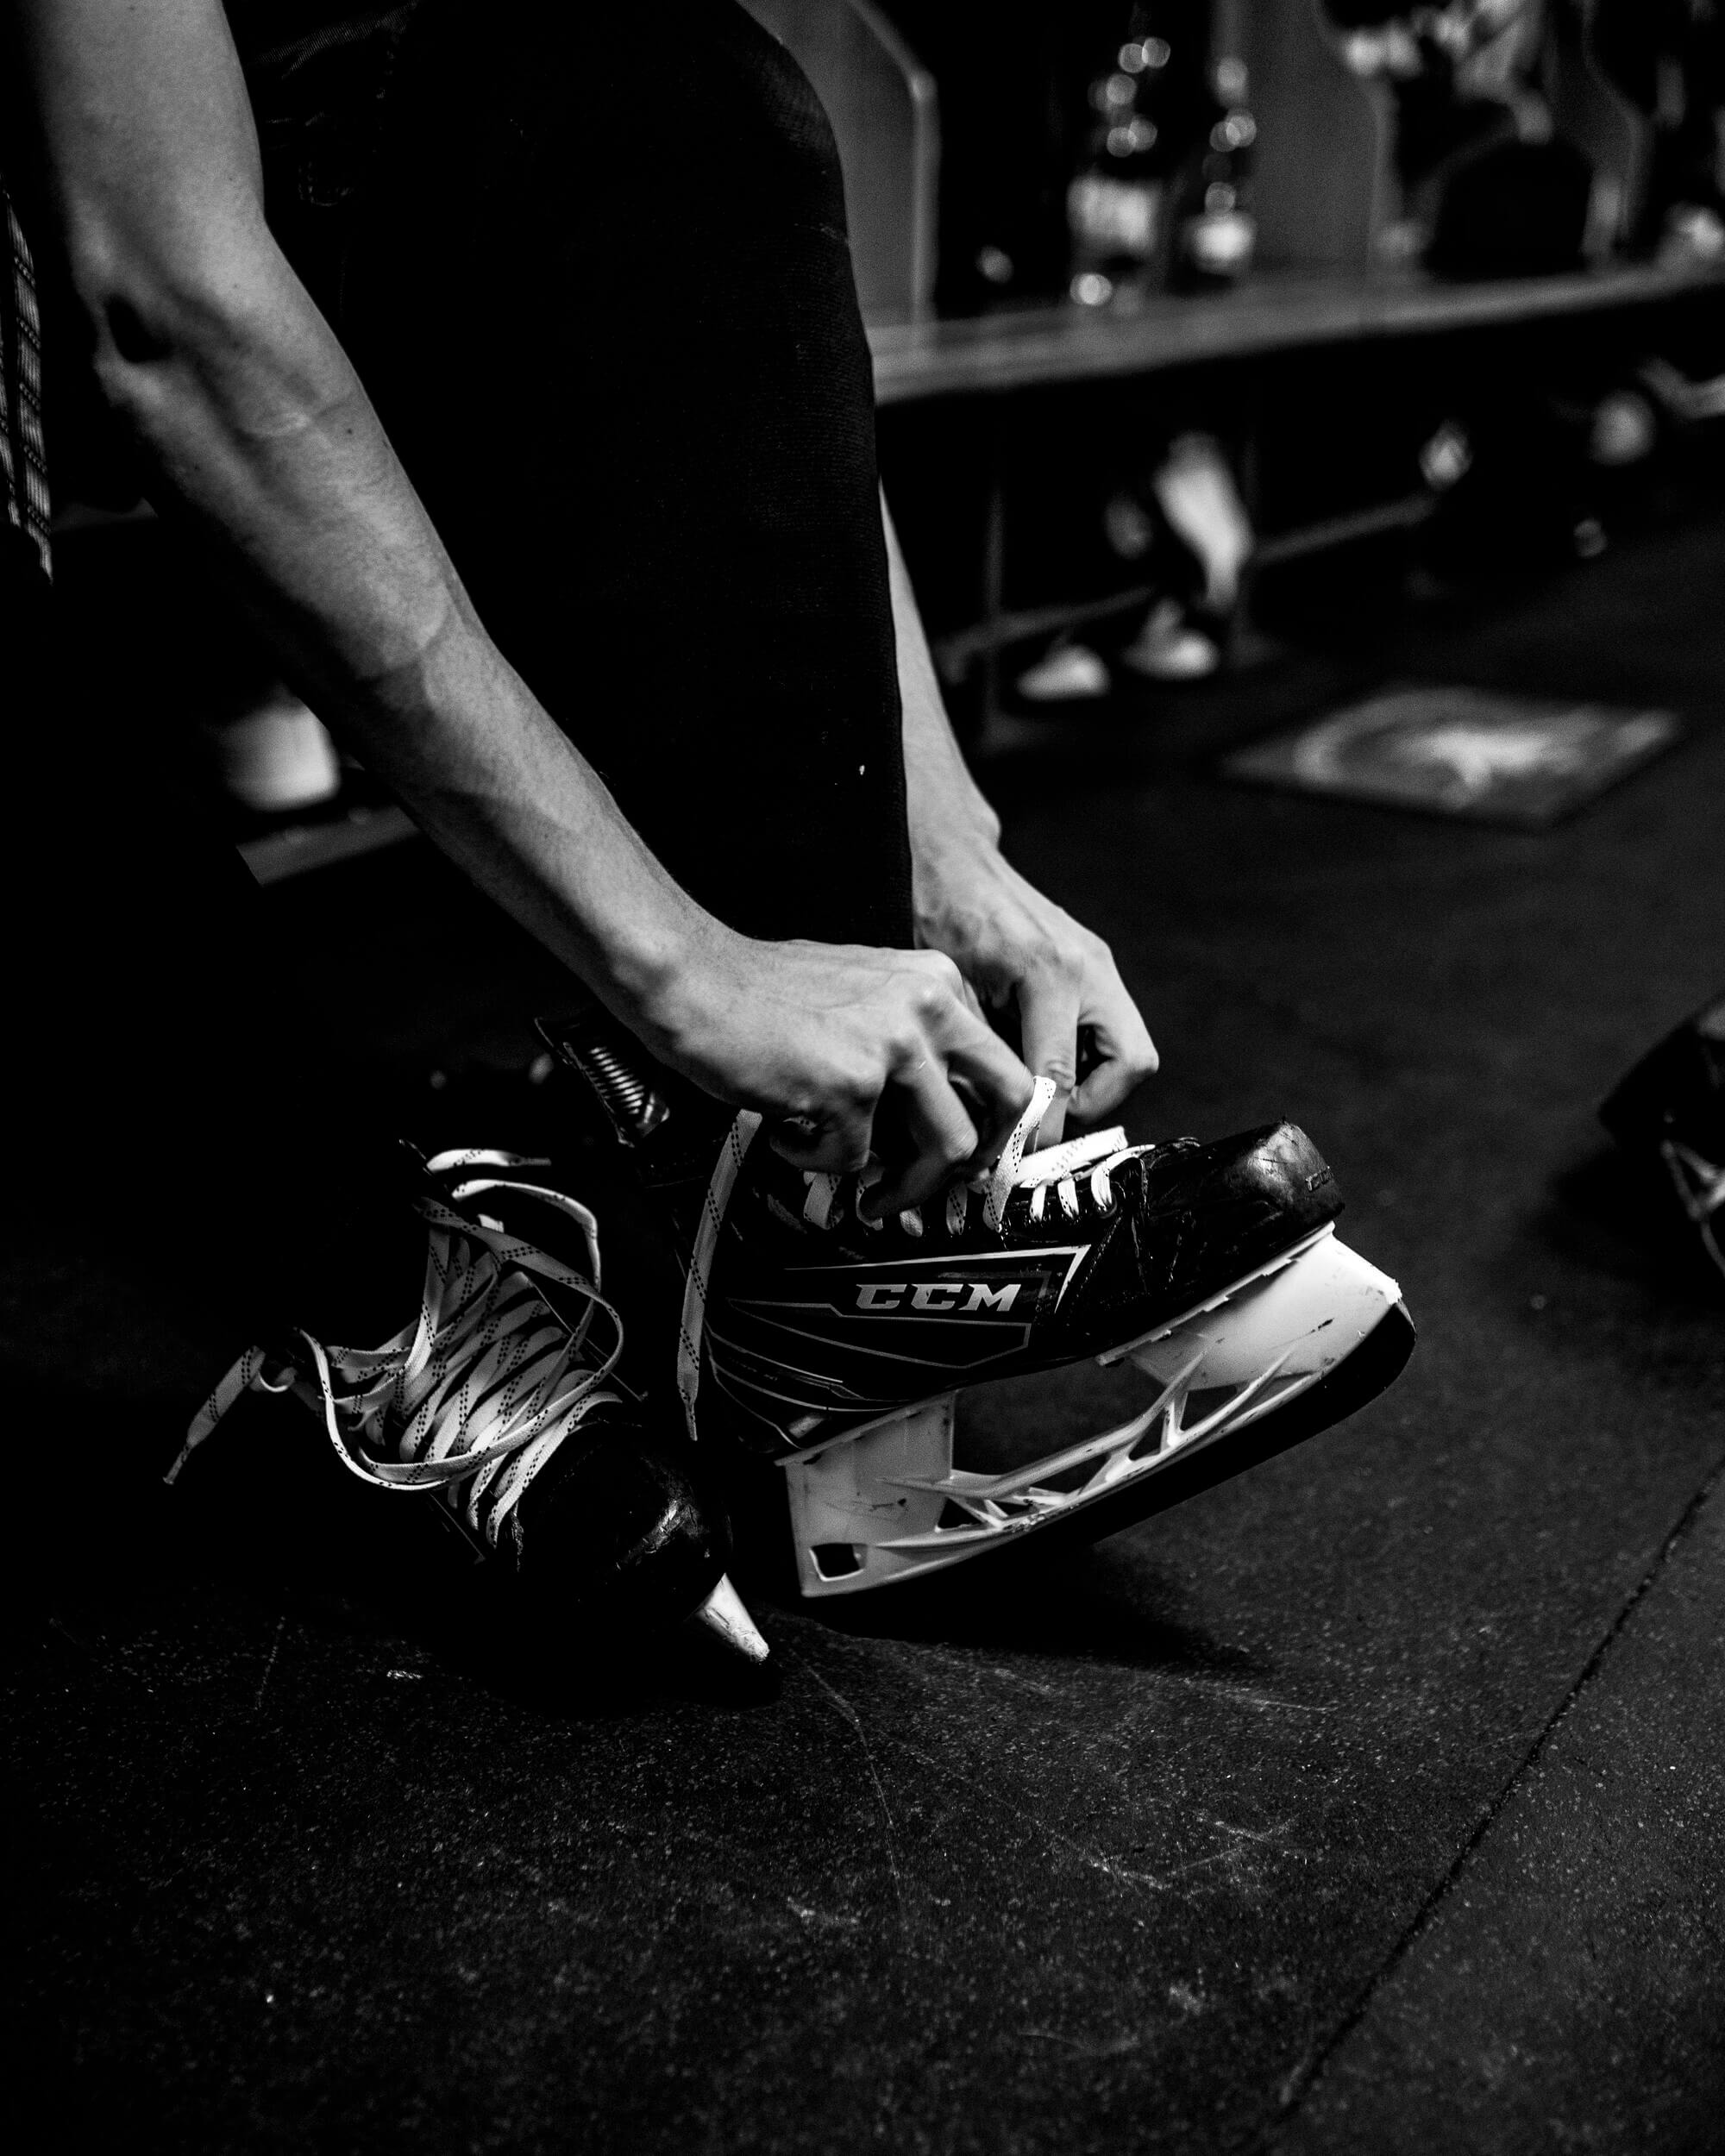 Hockey player lacing up - stock